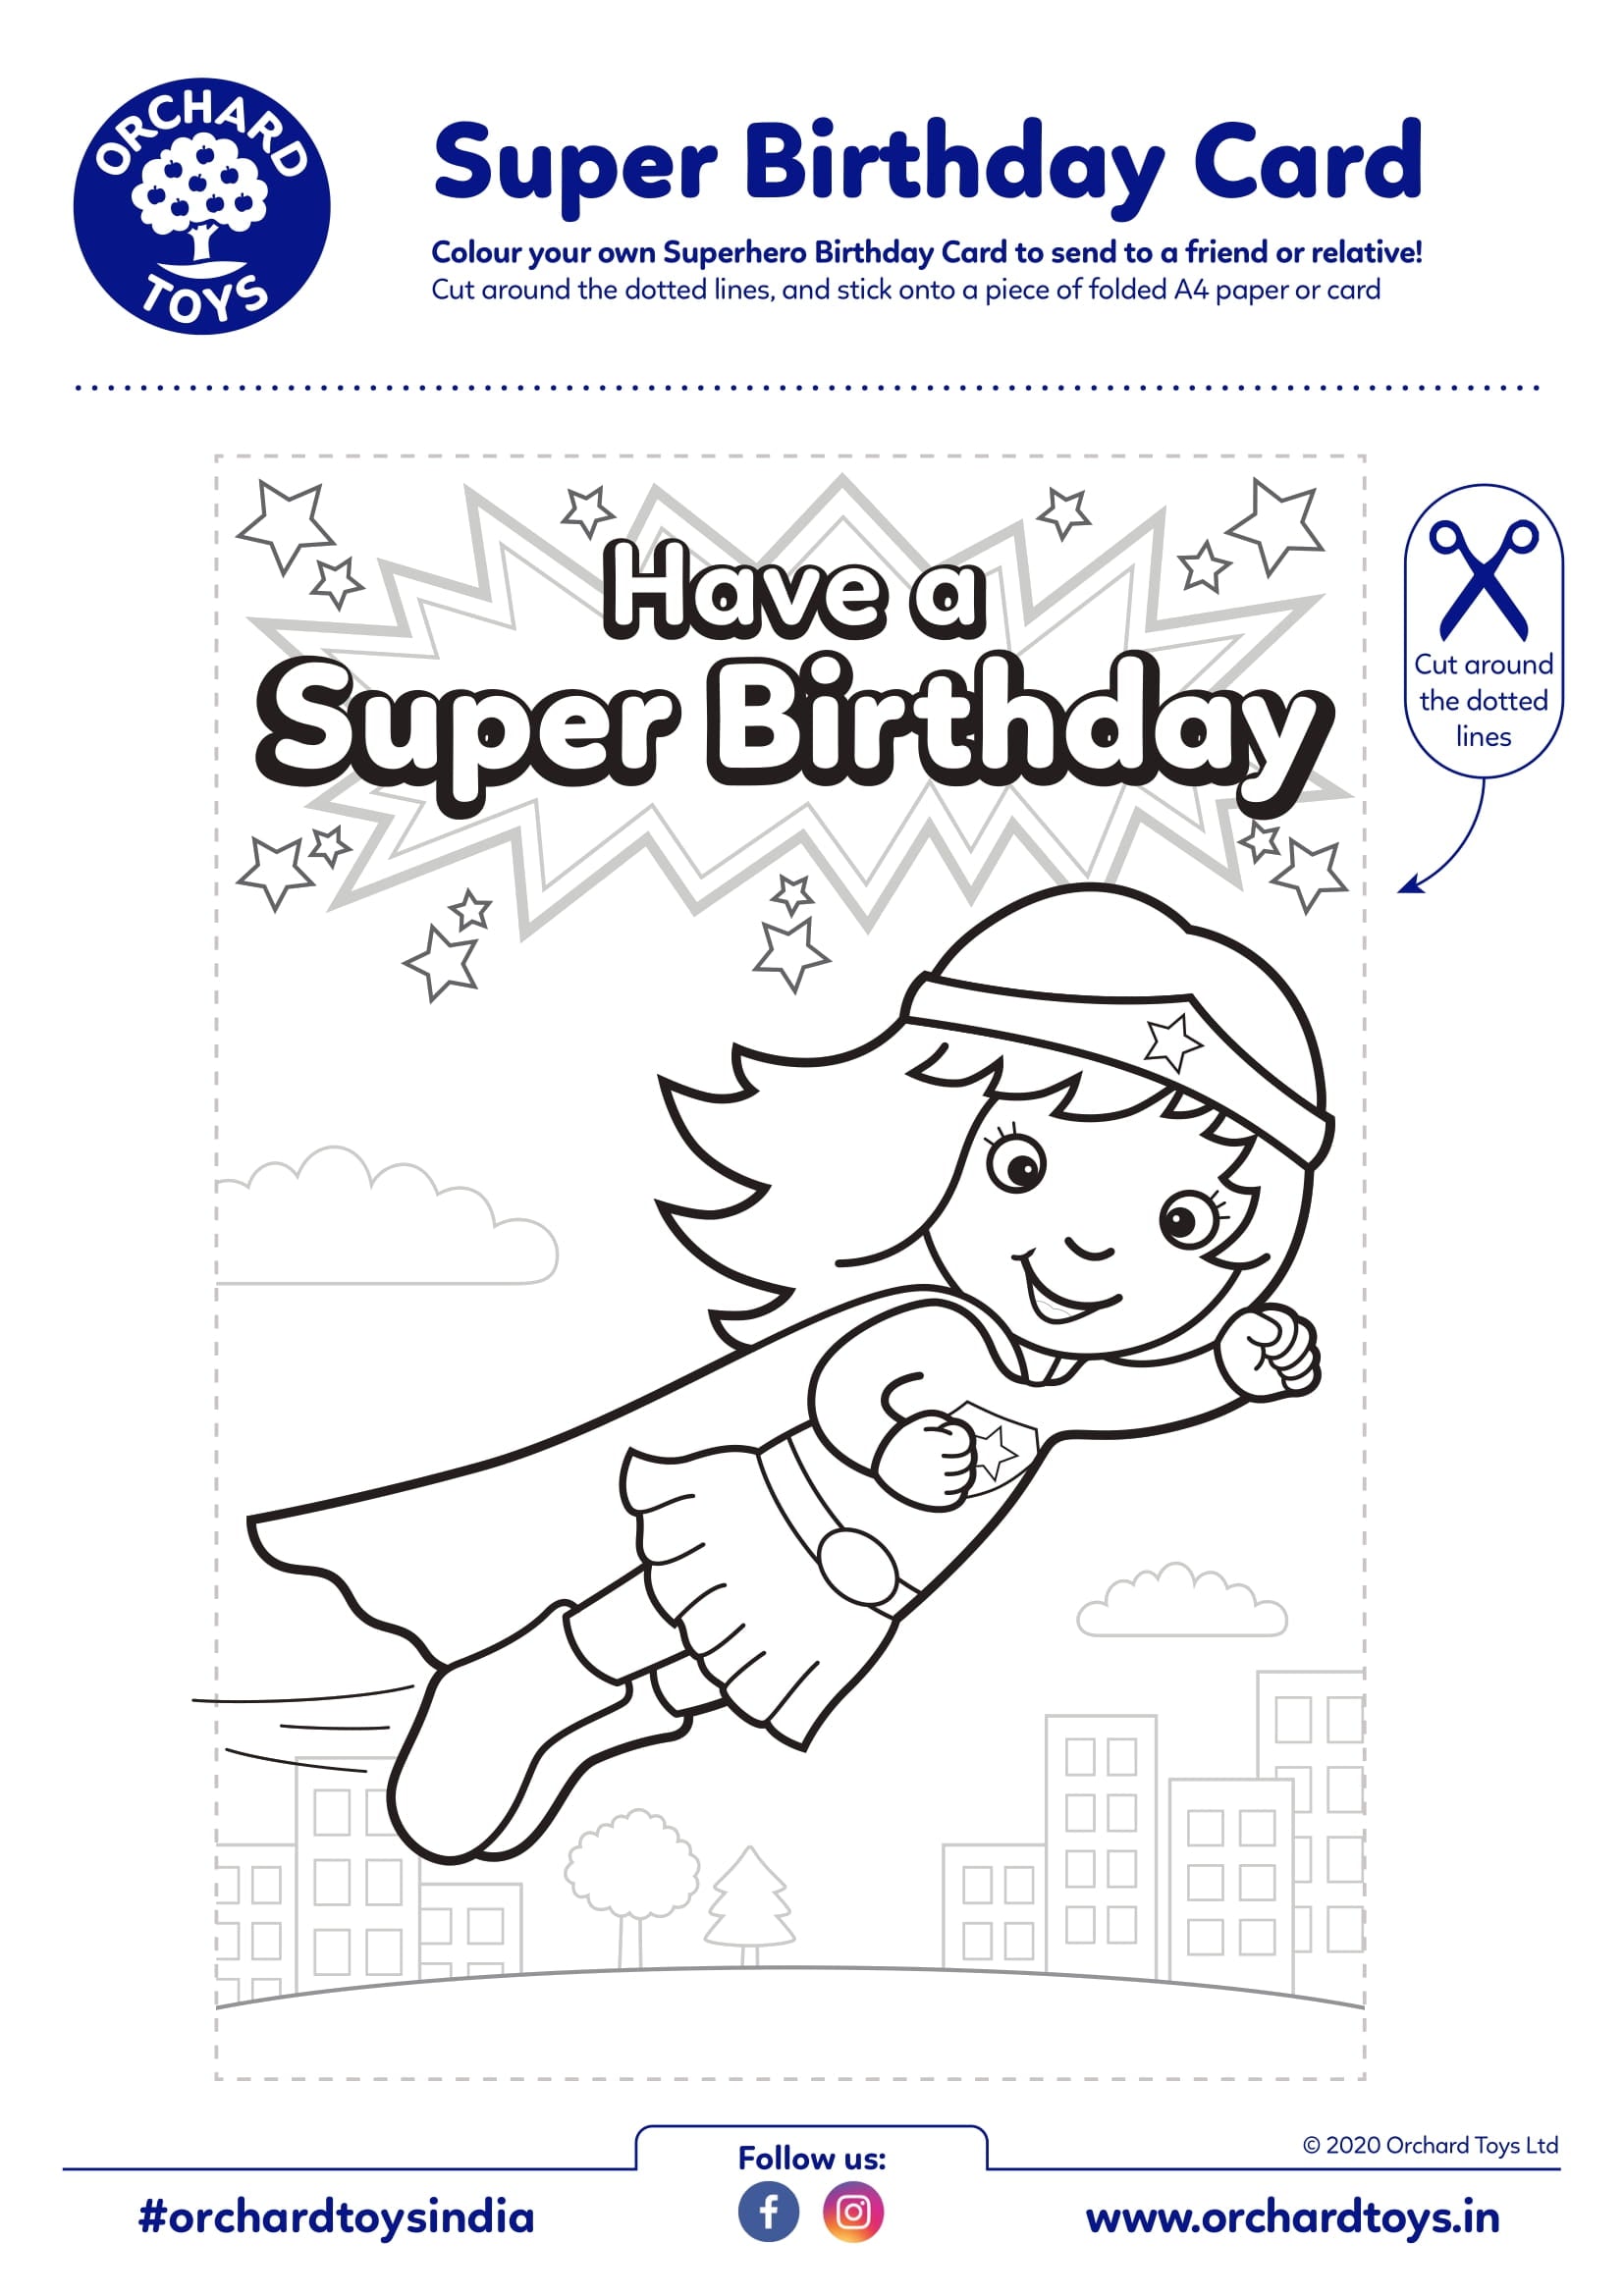 Super Birthday Card 2